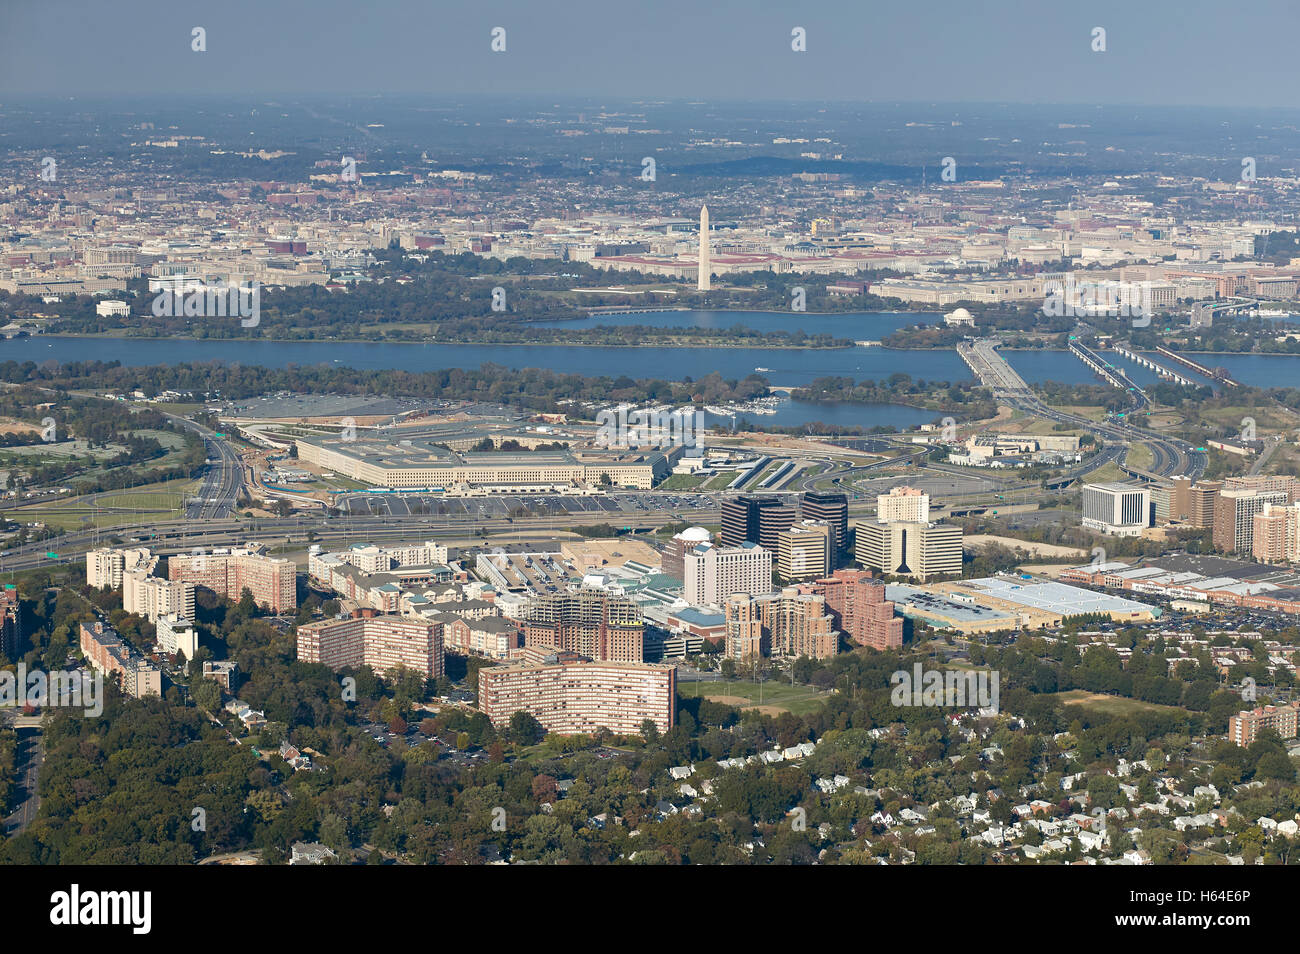 USA, Aerial photograph above South Arlington, Virginia looking across the Potomac River on Washington, D.C. Stock Photo